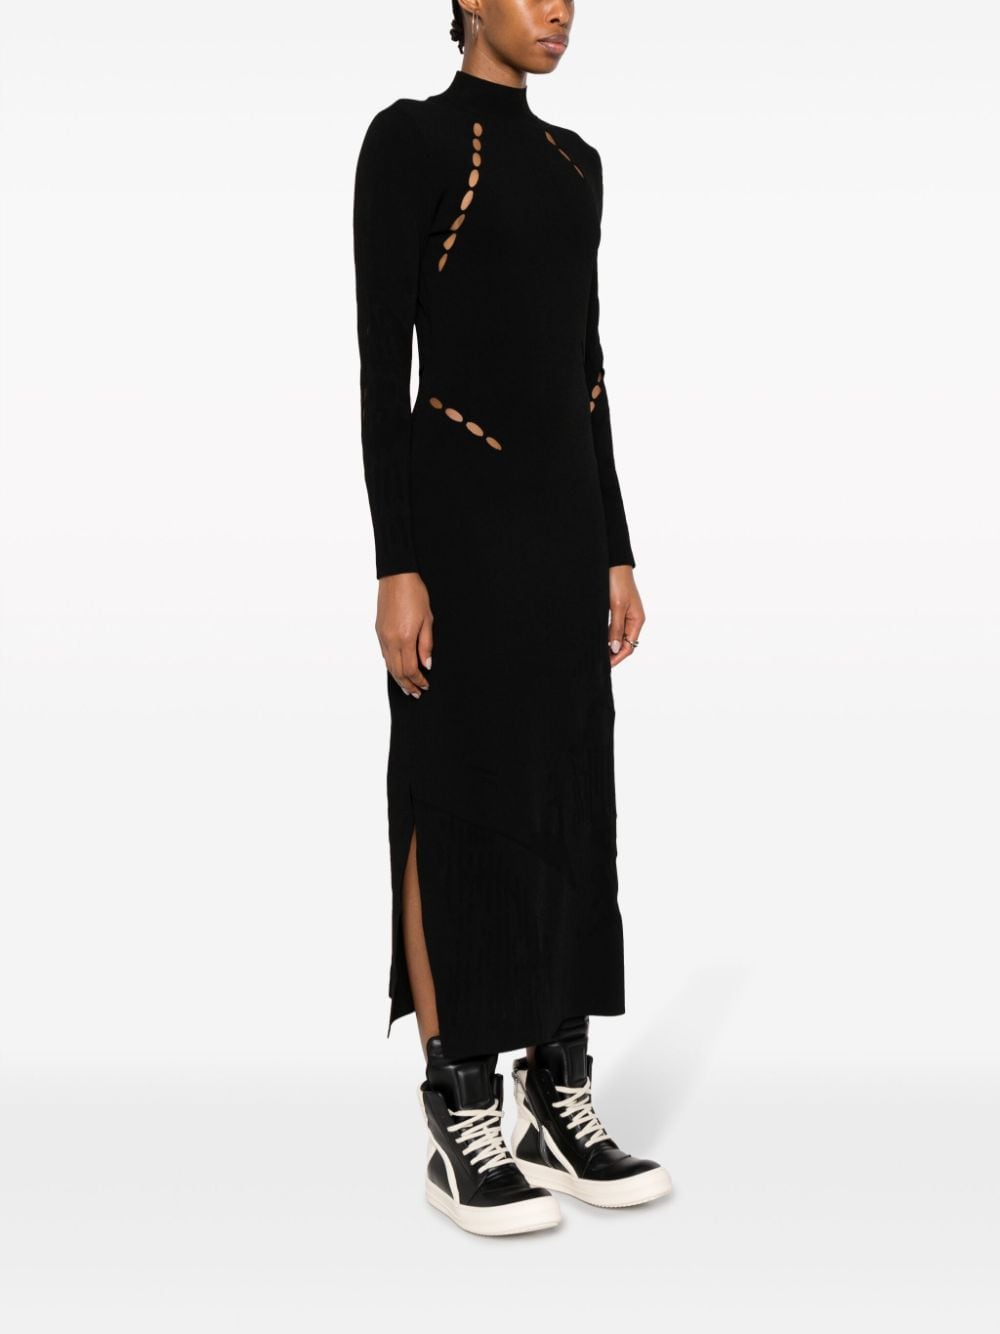 Black Devoré Knit Dress with Cut-Out Detailing and Side Slits